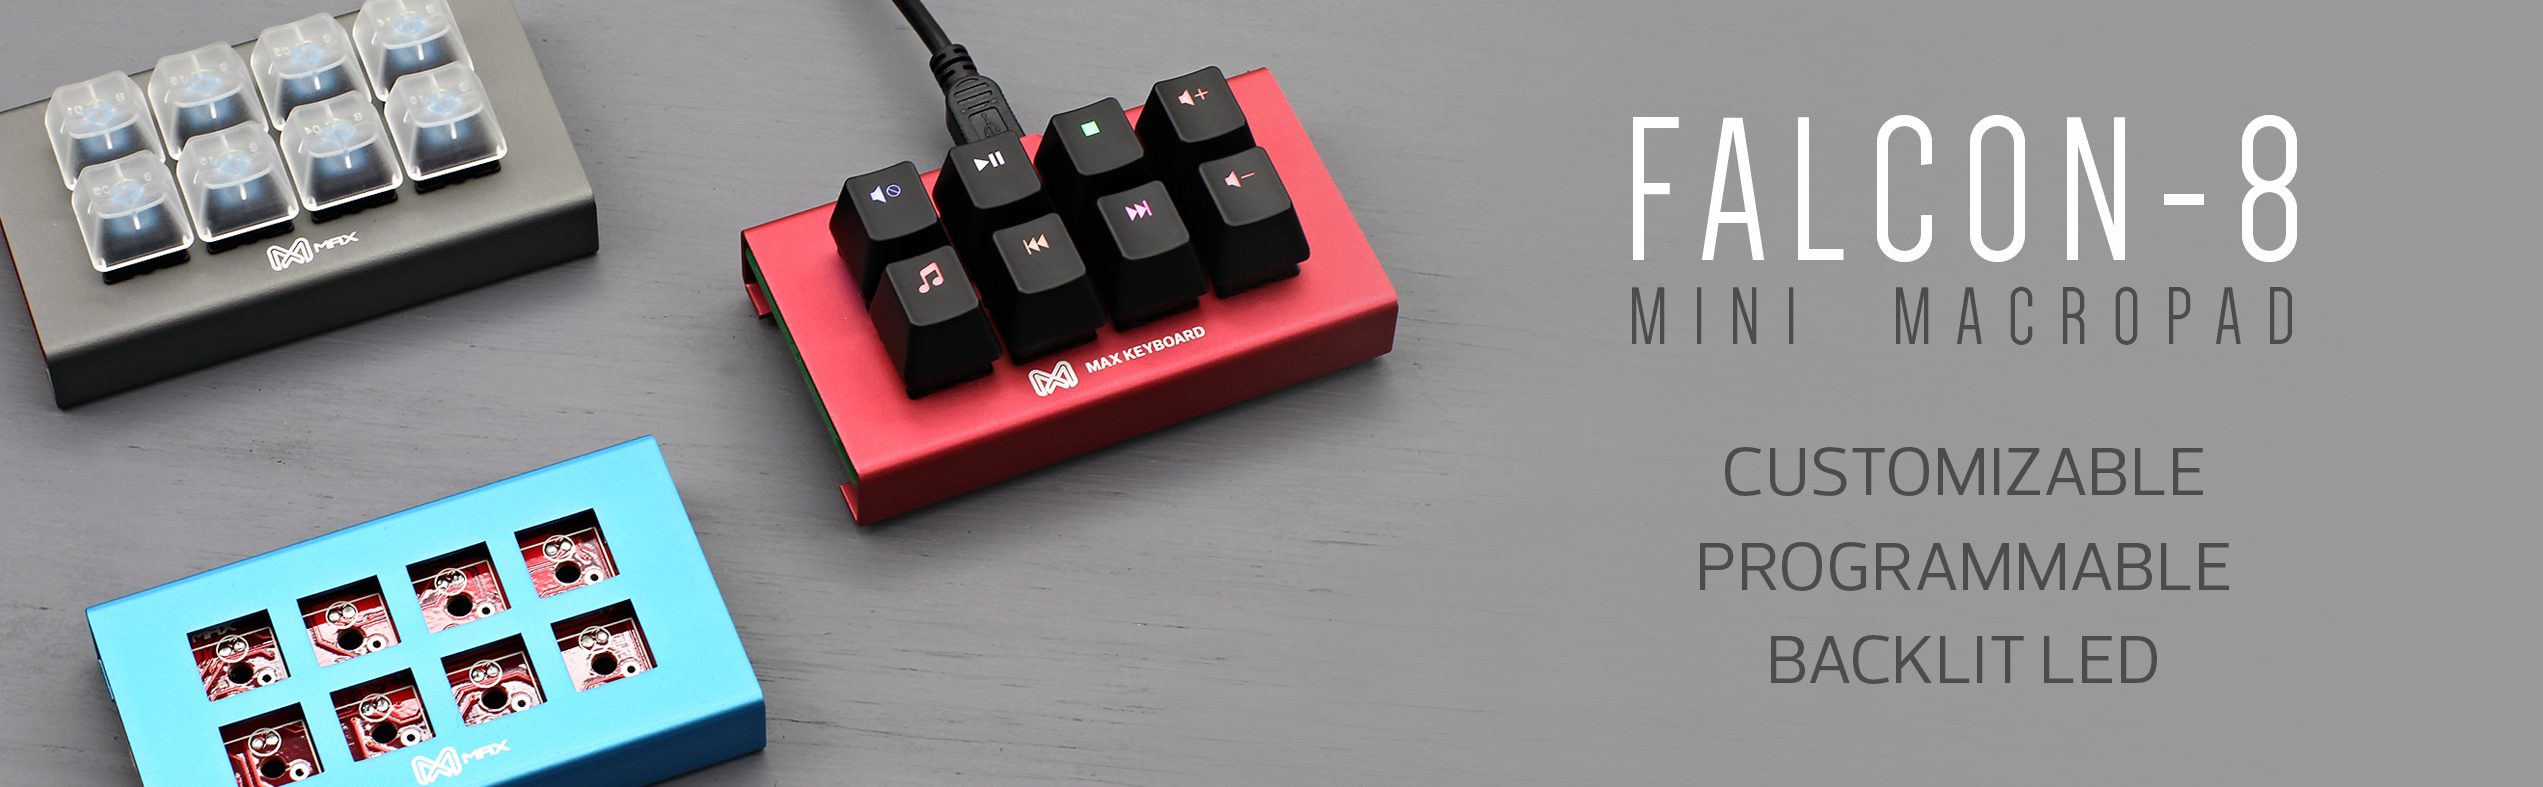 Max Keyboard Falcon-8 Custom Programmable Mini Macropad Mechanical Keyboard